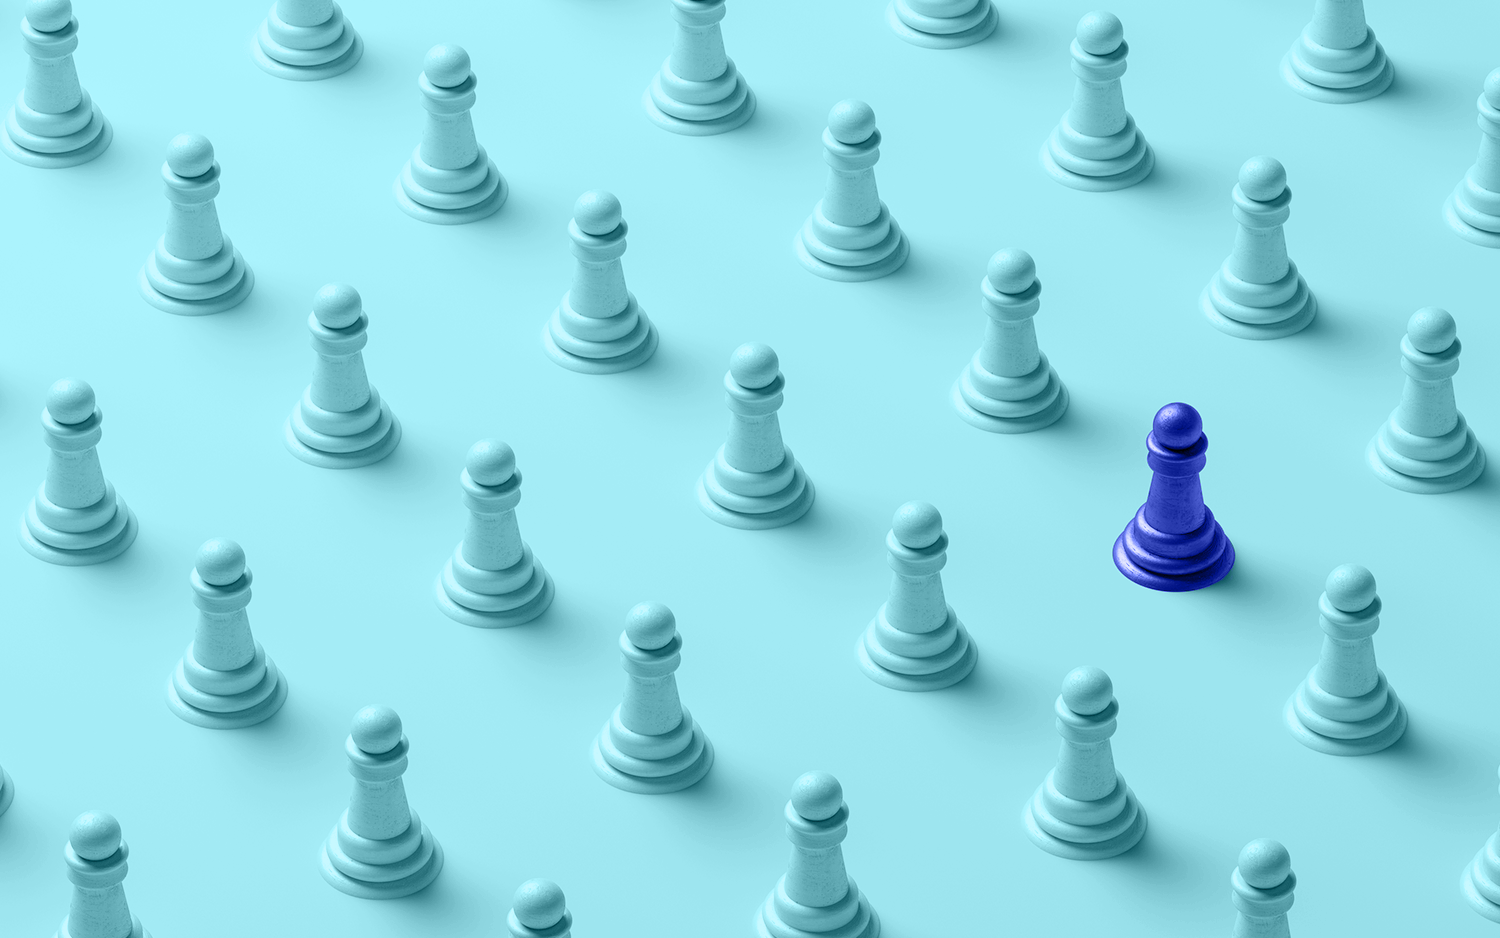 Blue chessboard